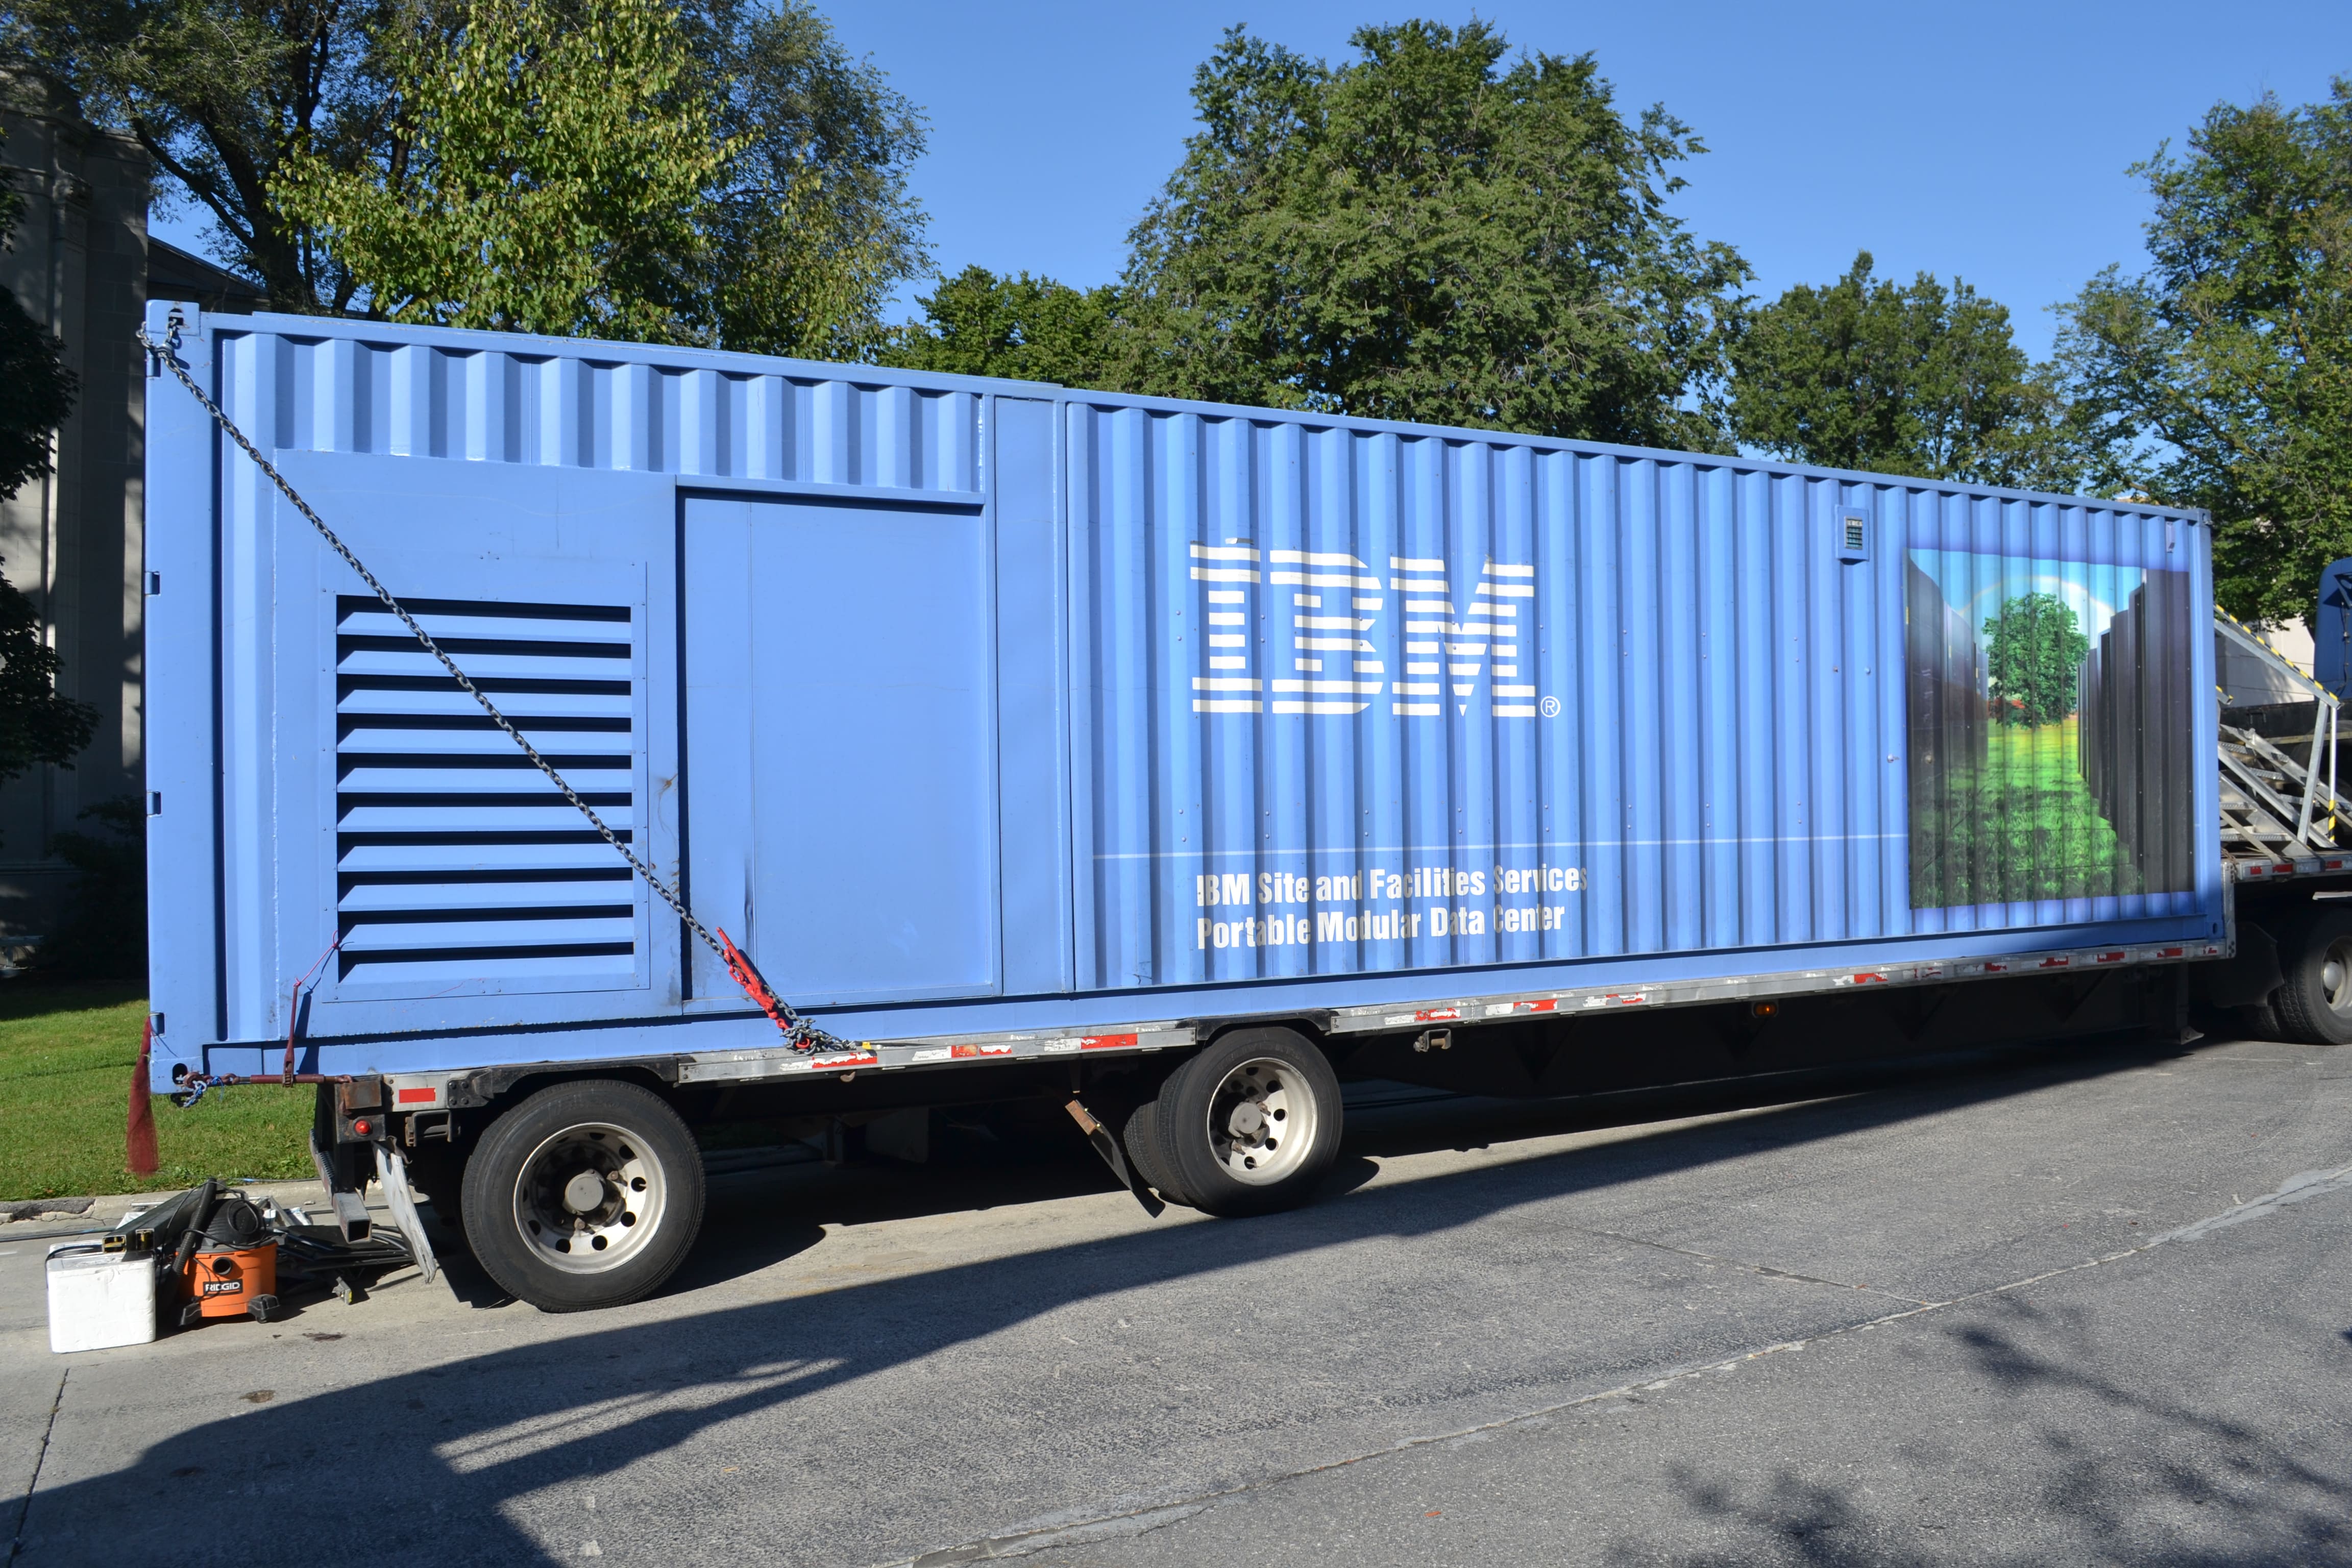 IBM Mobile Modular Data Centers